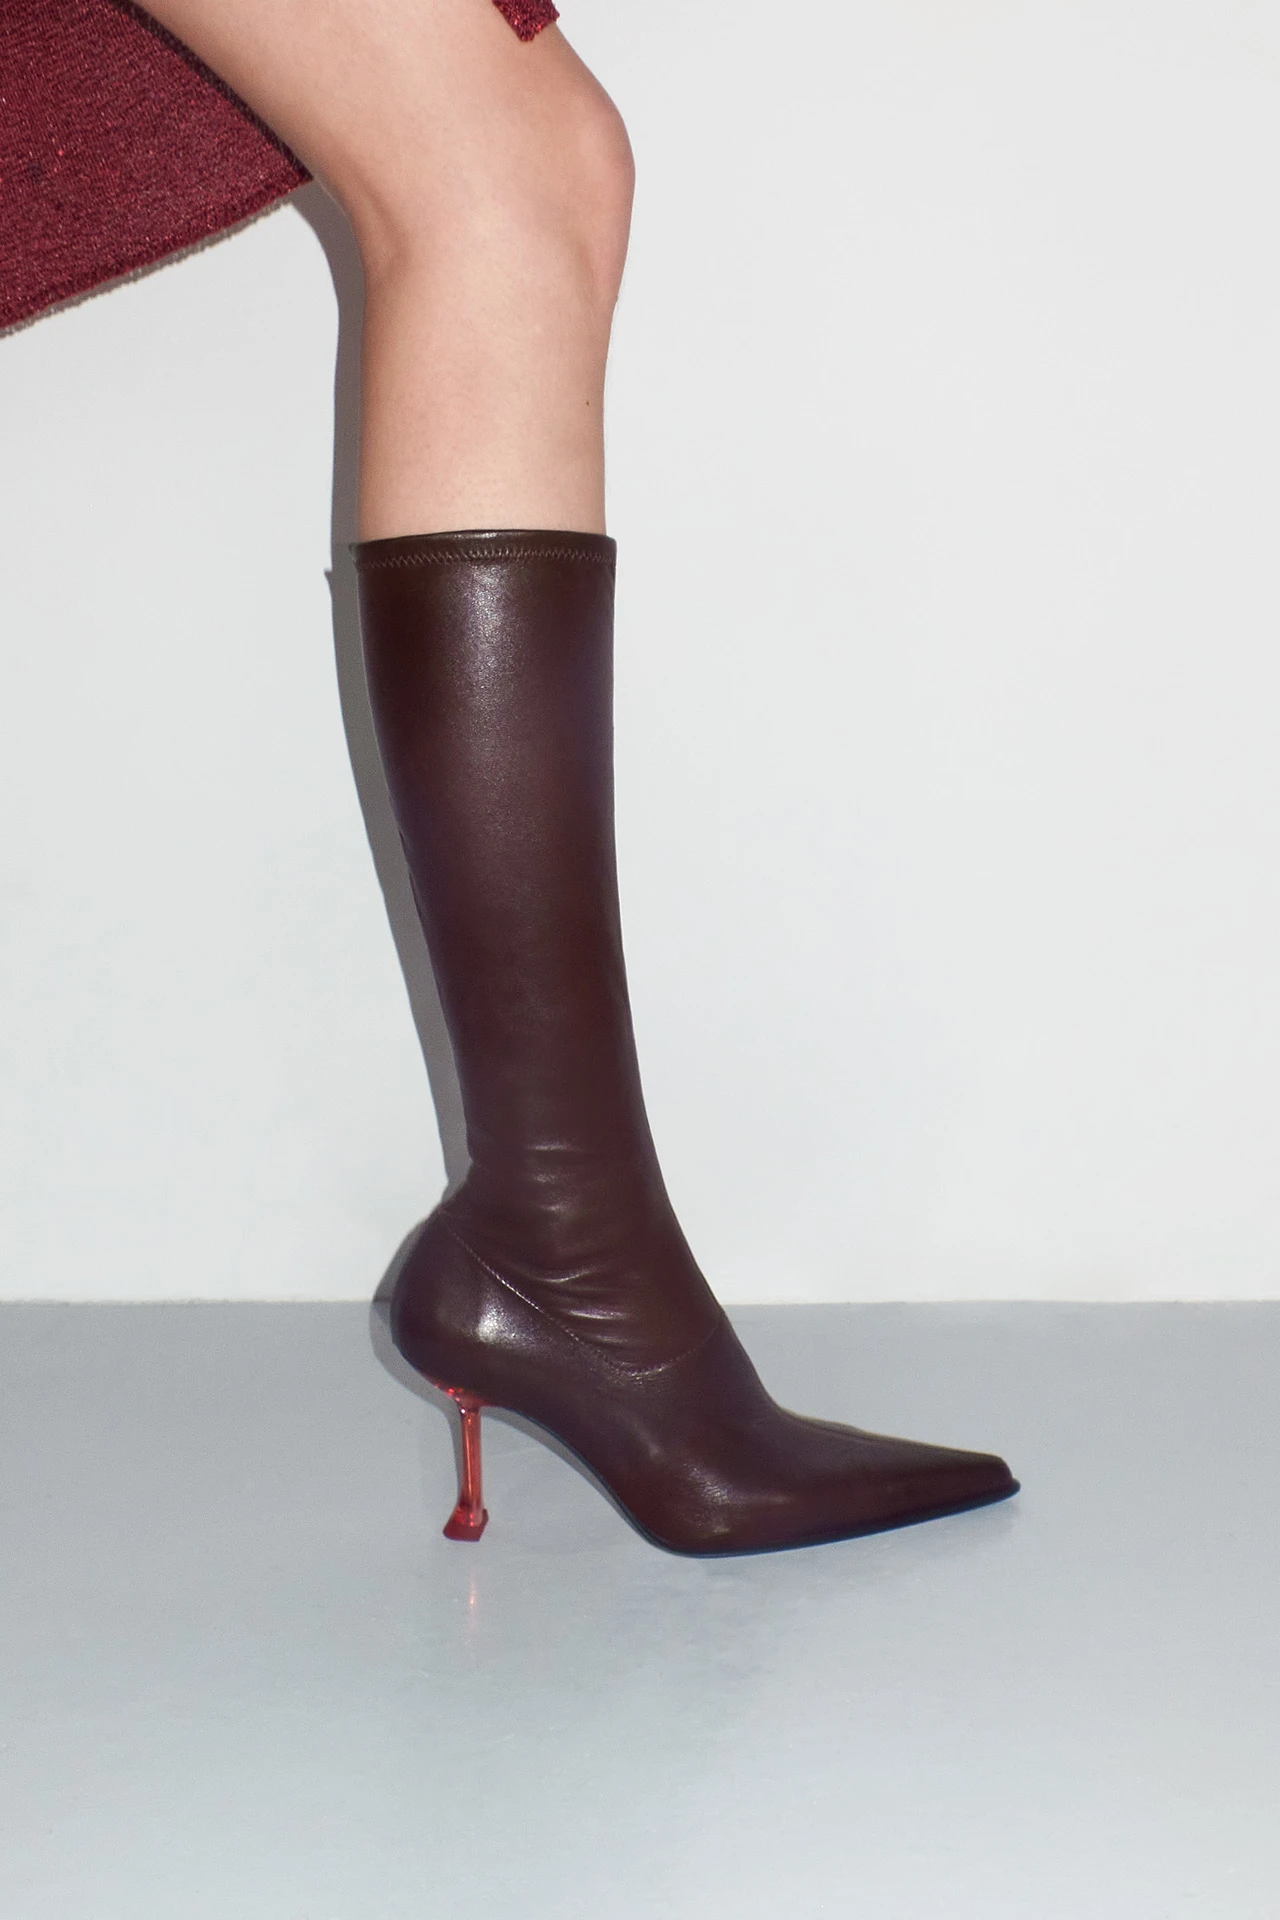 EC-Miista-carlita-burgundy-tall-boots-02